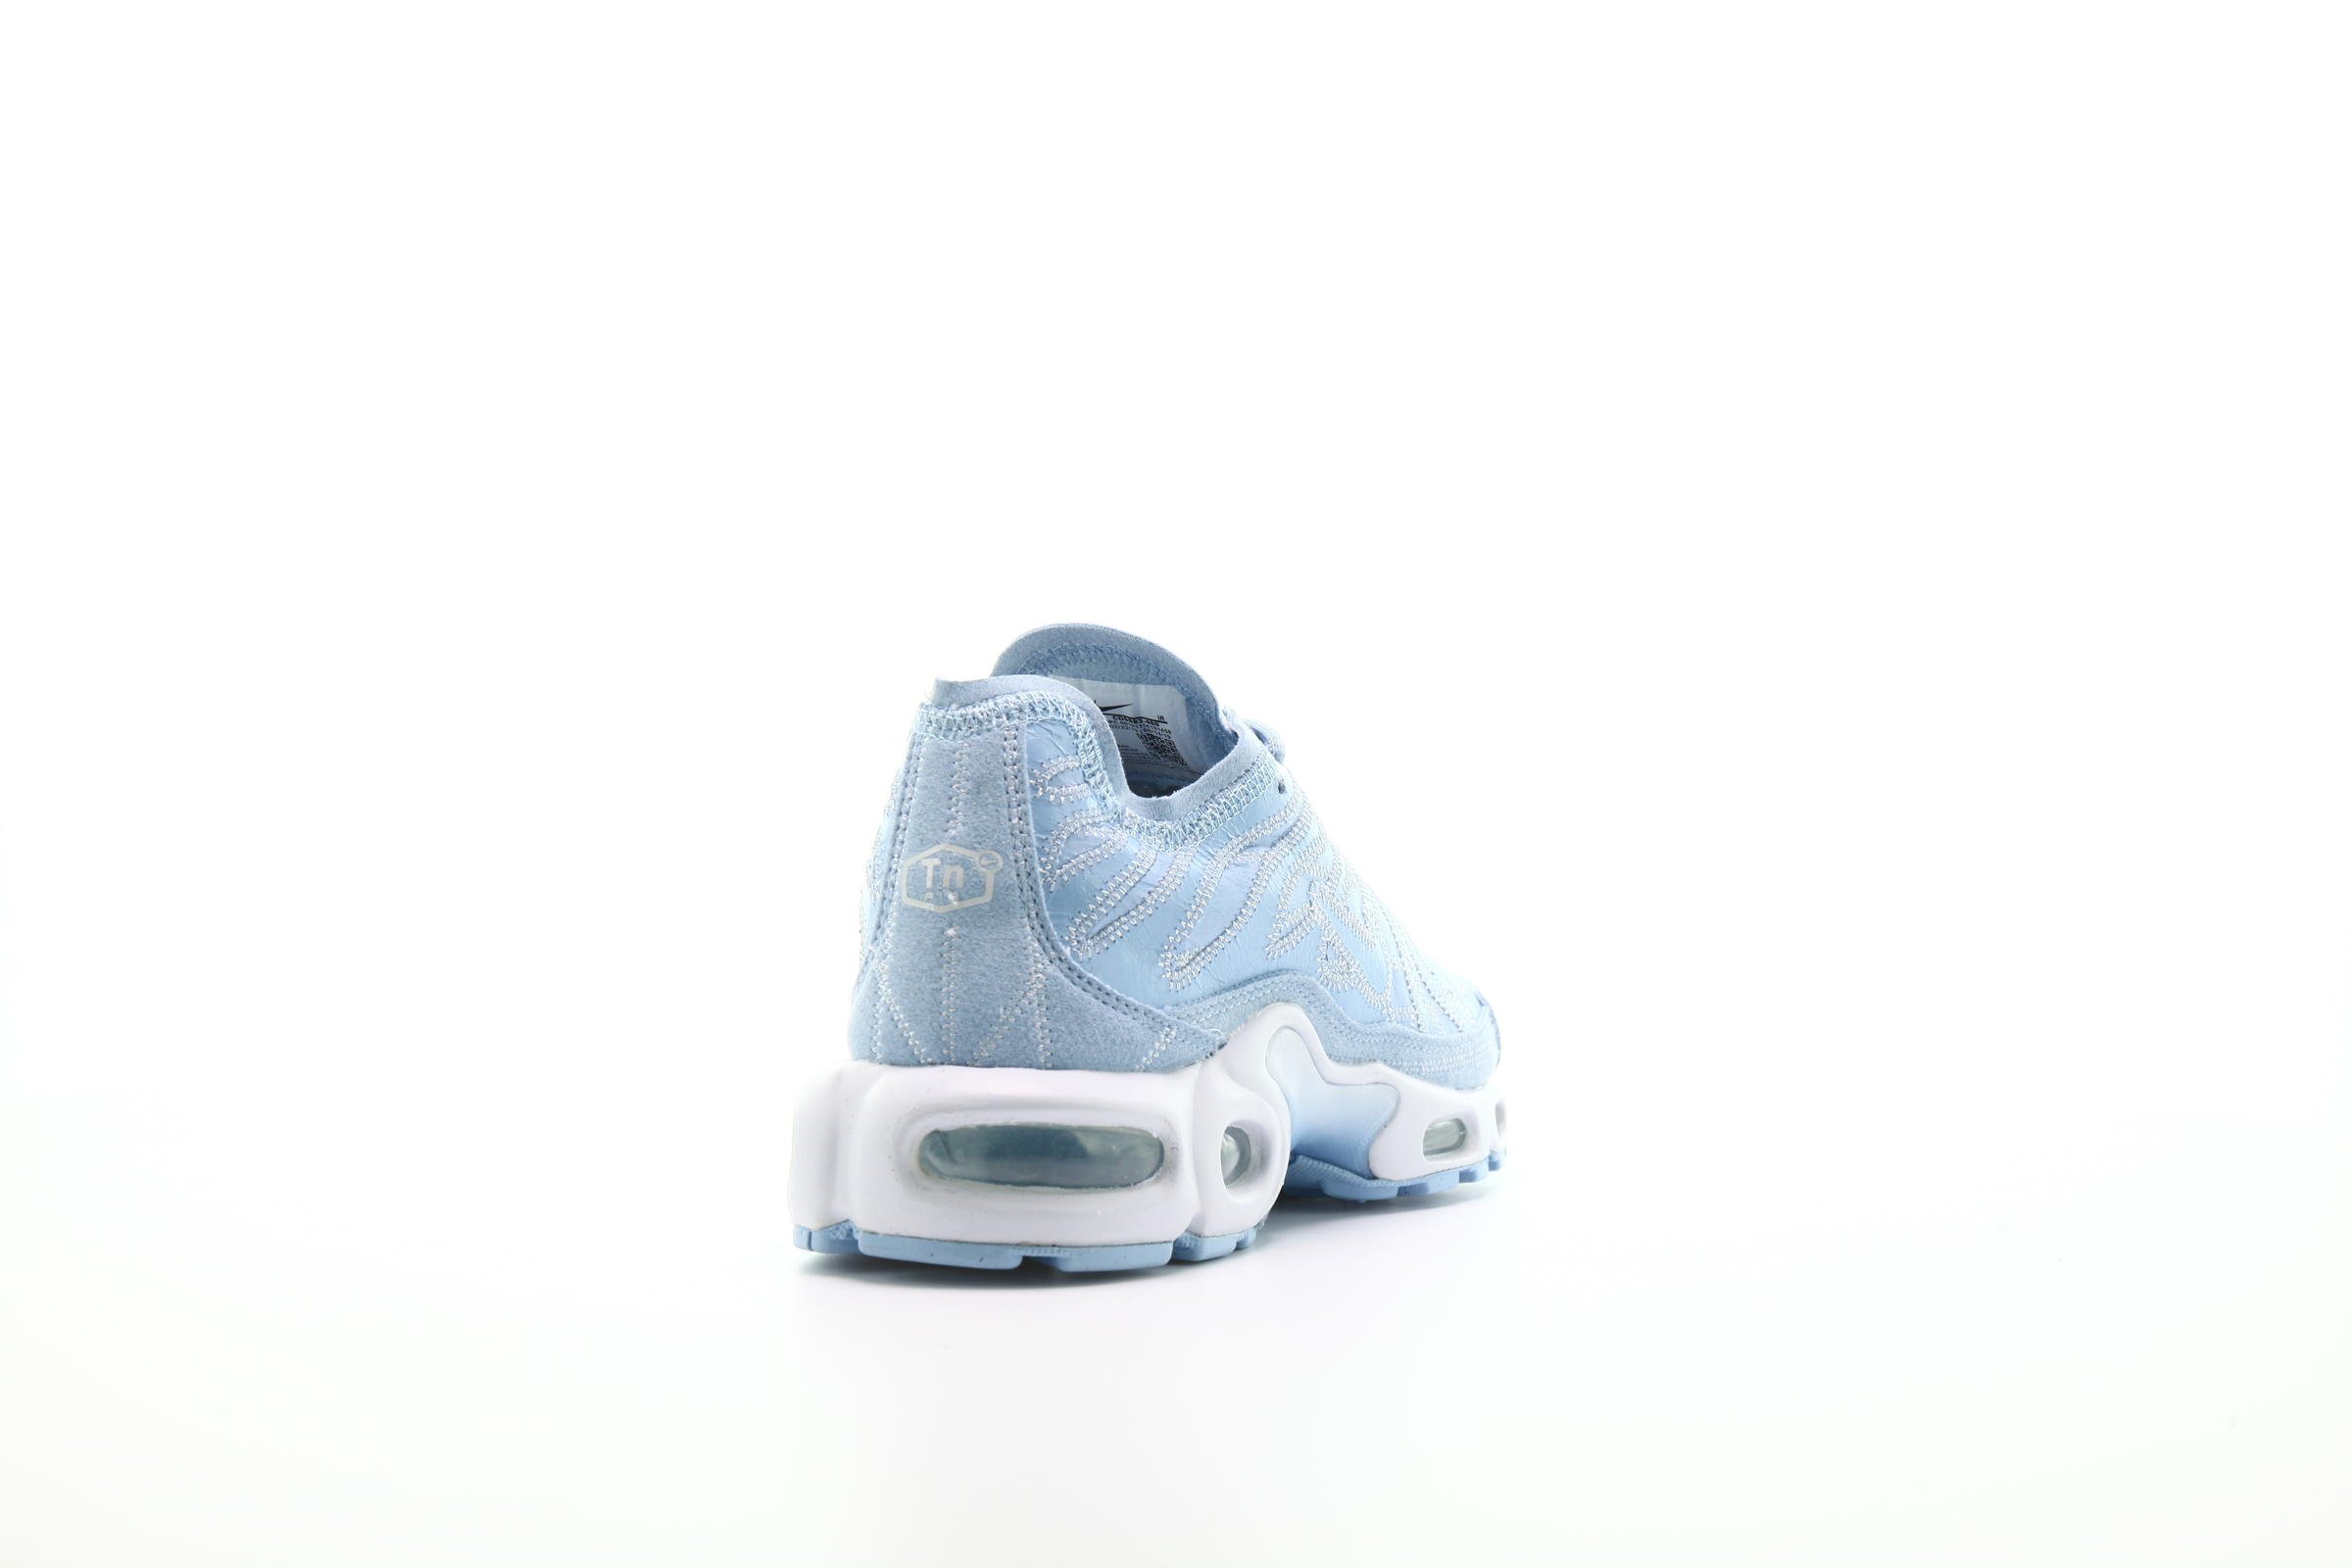 Nike Air Max Plus Decon "Psychic Blue"